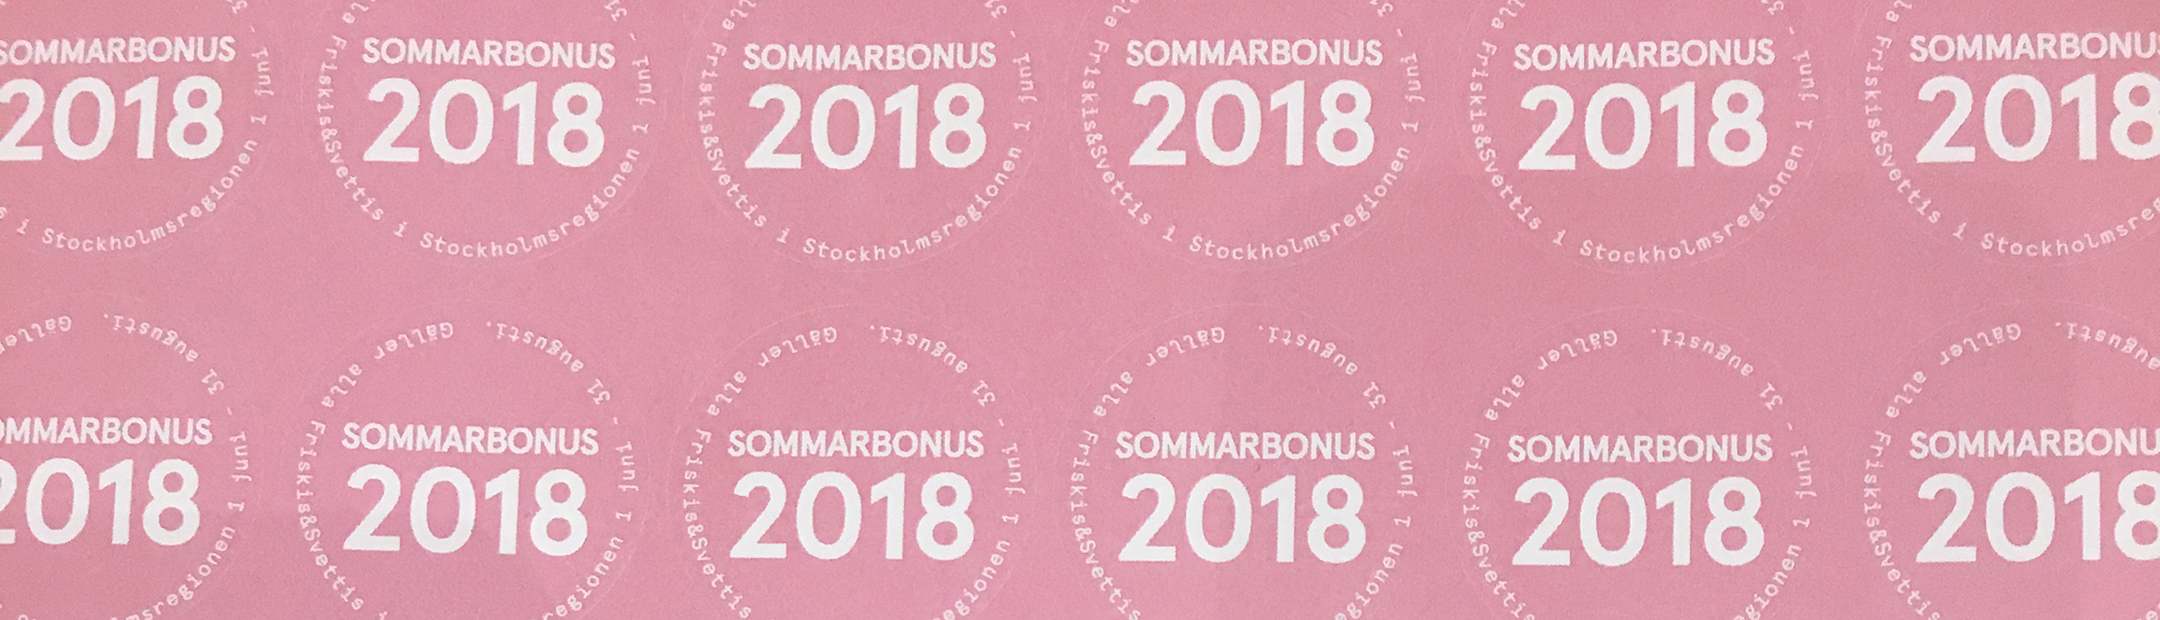 Friskis Sollentuna Sommarbonus 2018